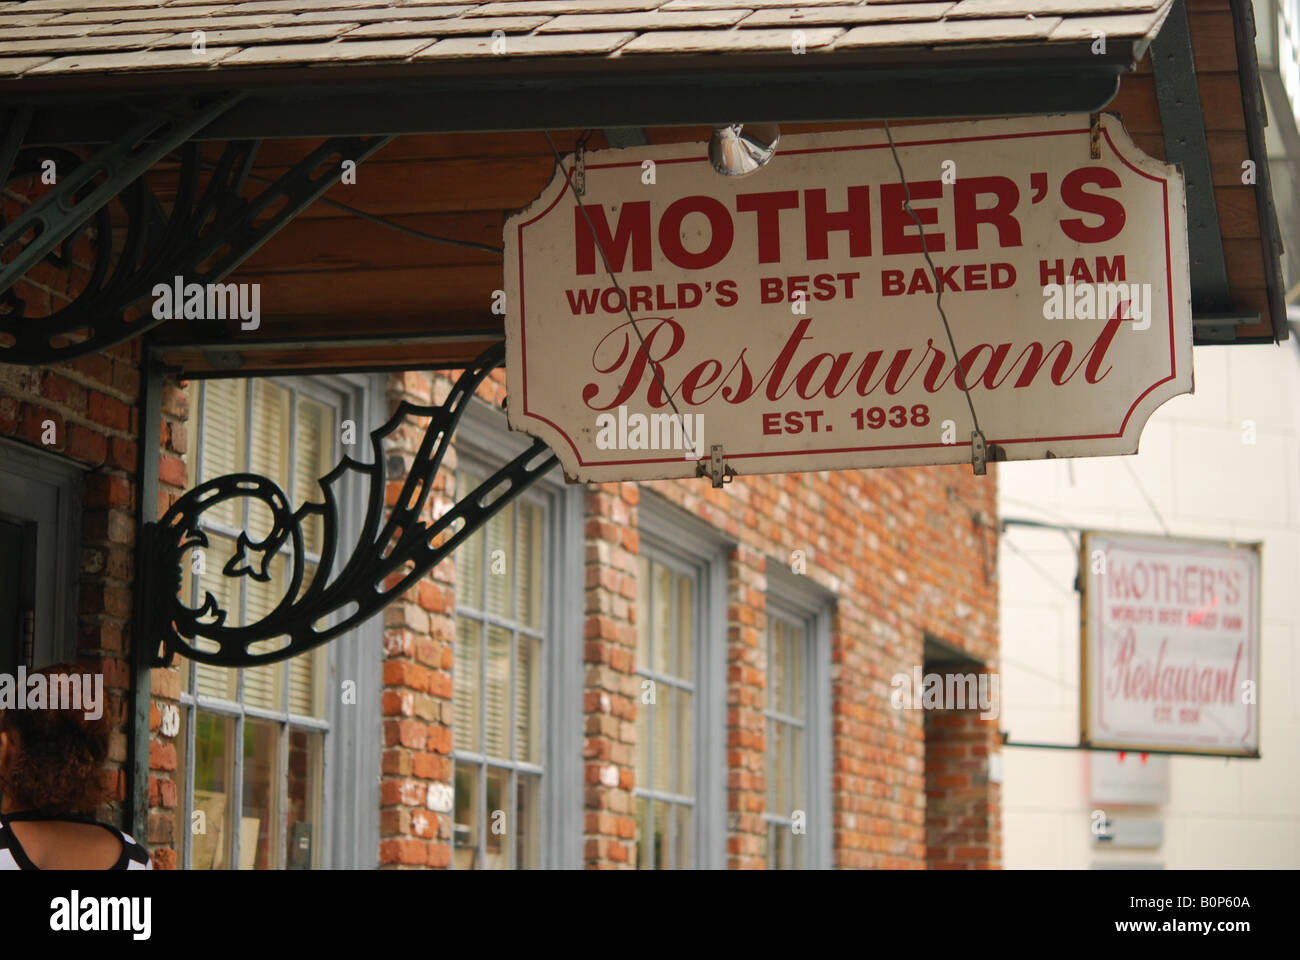 Mother's Restaurant sign in New Orleans, Louisiana, post Katrina. Stock Photo